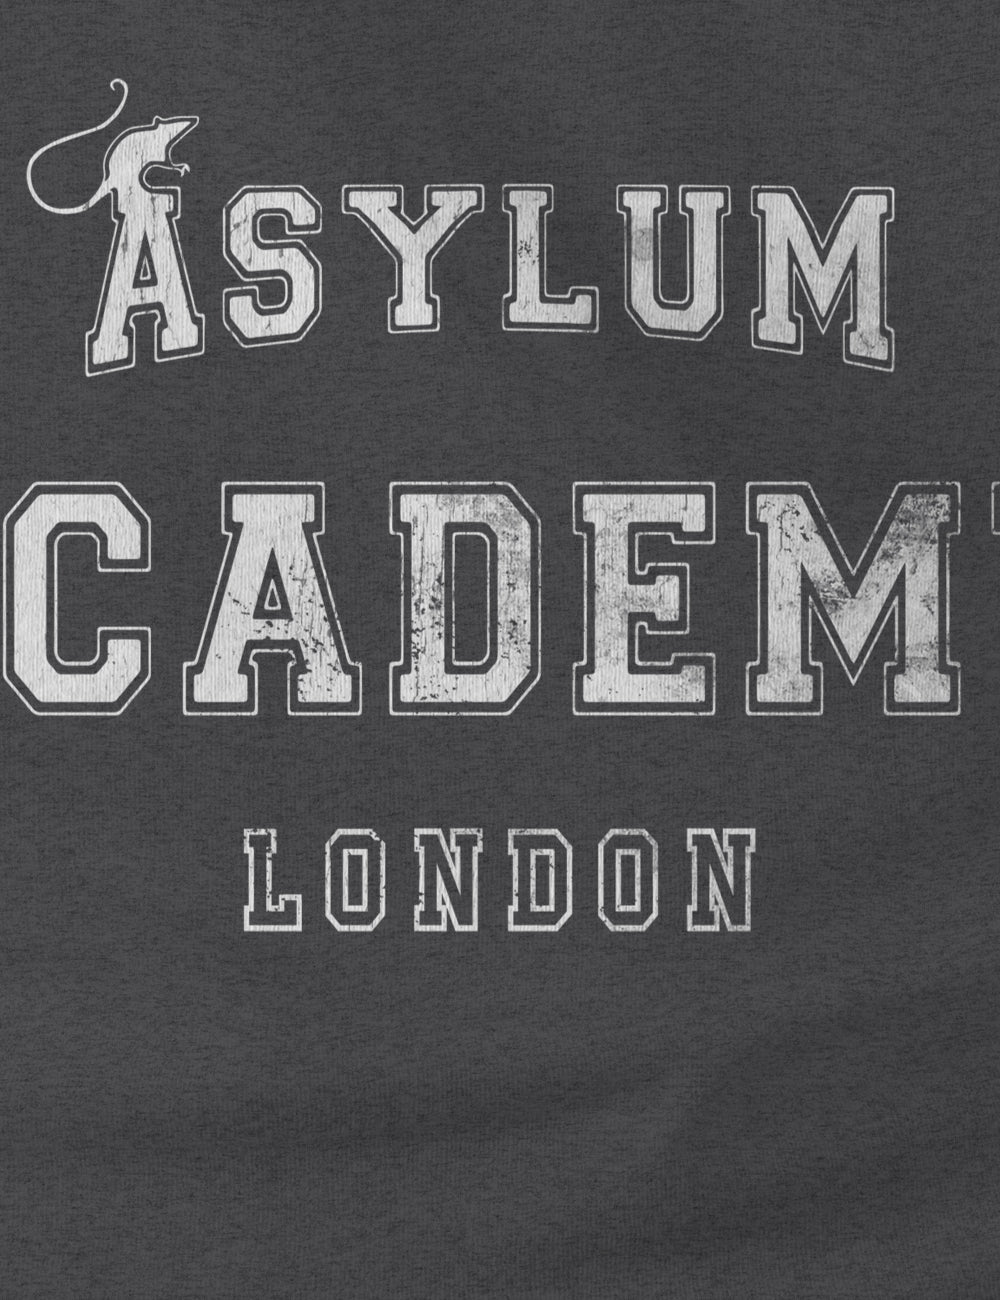 "Asylum Academy" Cotton Tee | Unisex